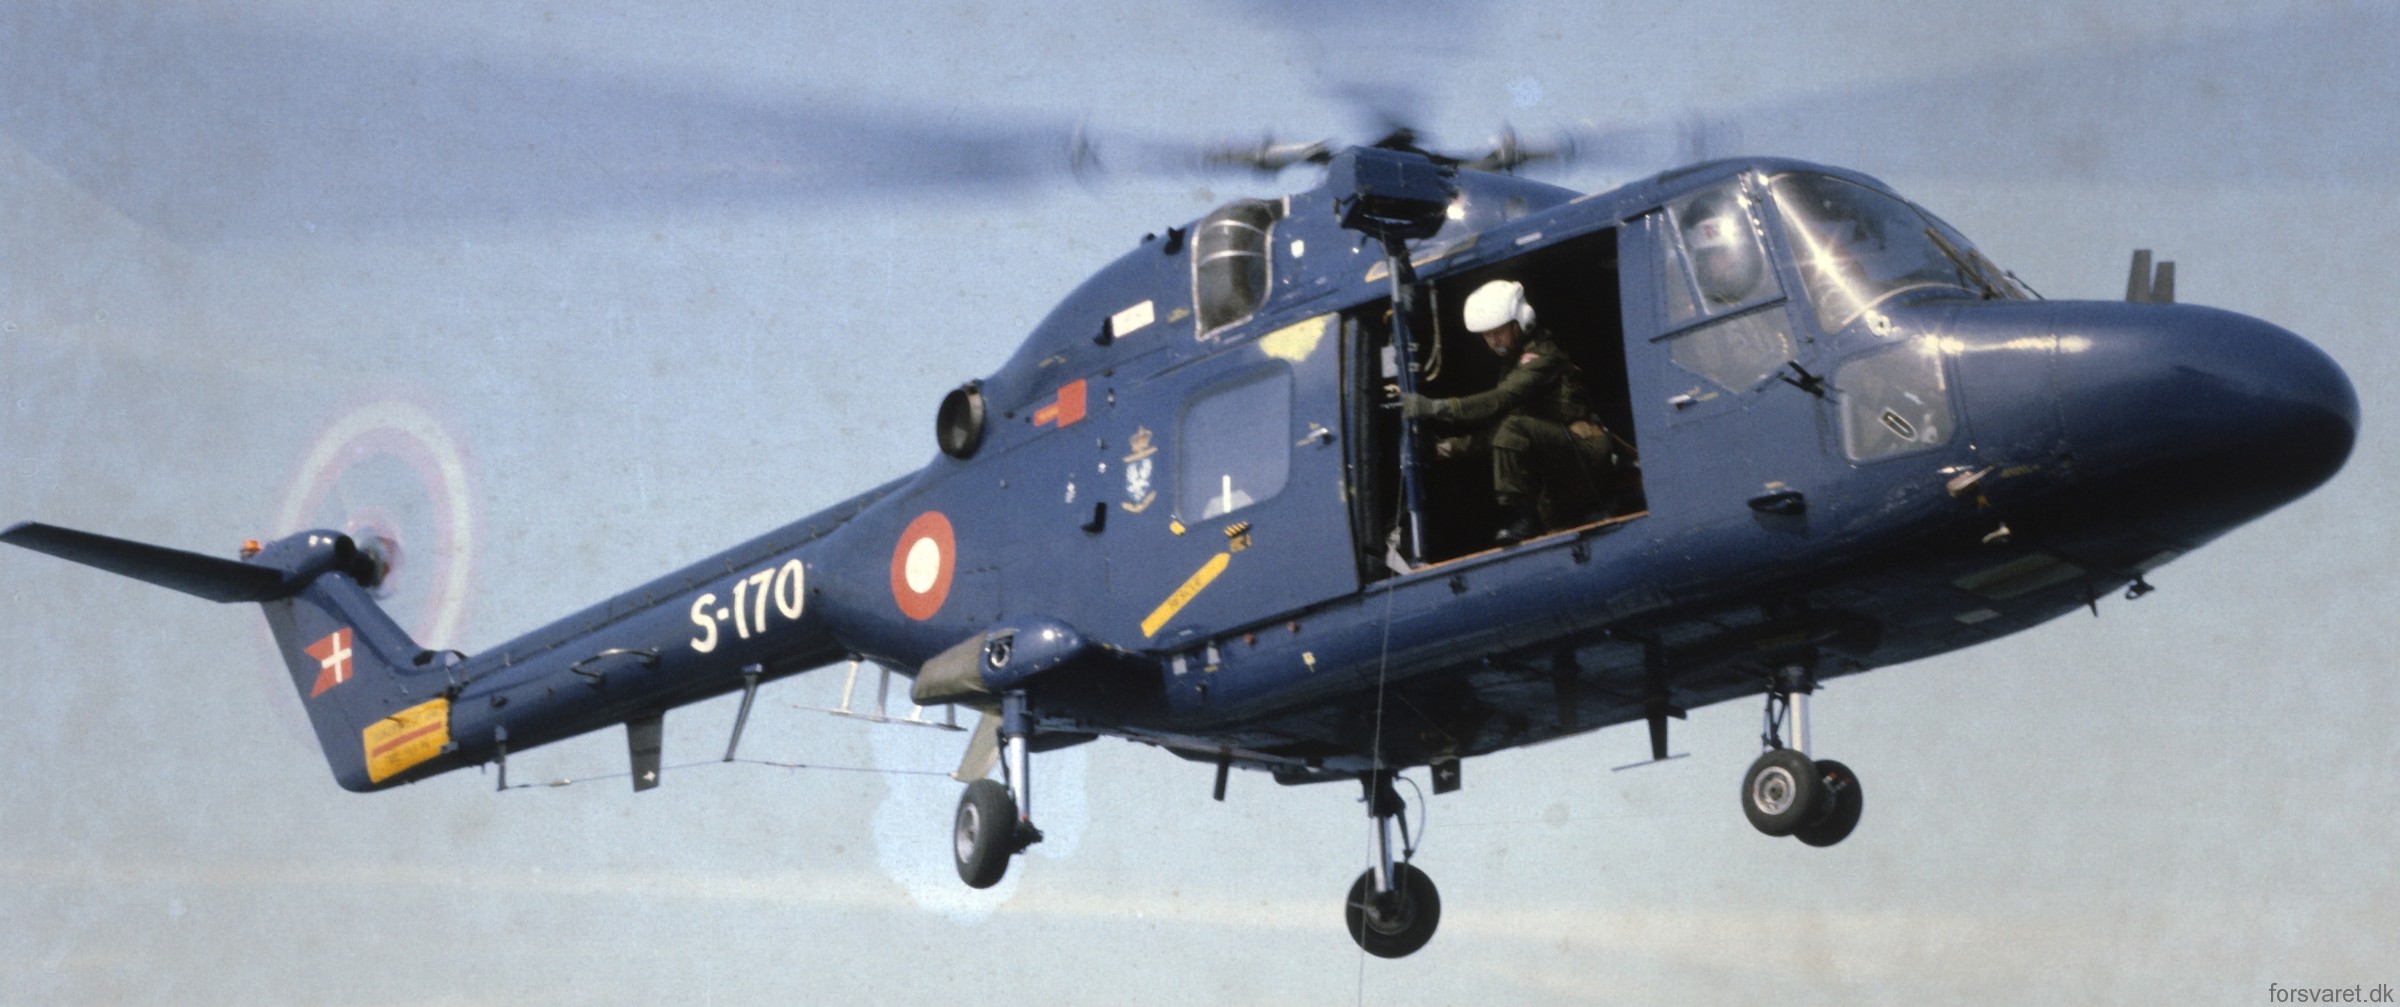 lynx mk.80 mk.90b helicopter westland royal danish navy air force kongelige danske marine flyvevabnet s-170 07